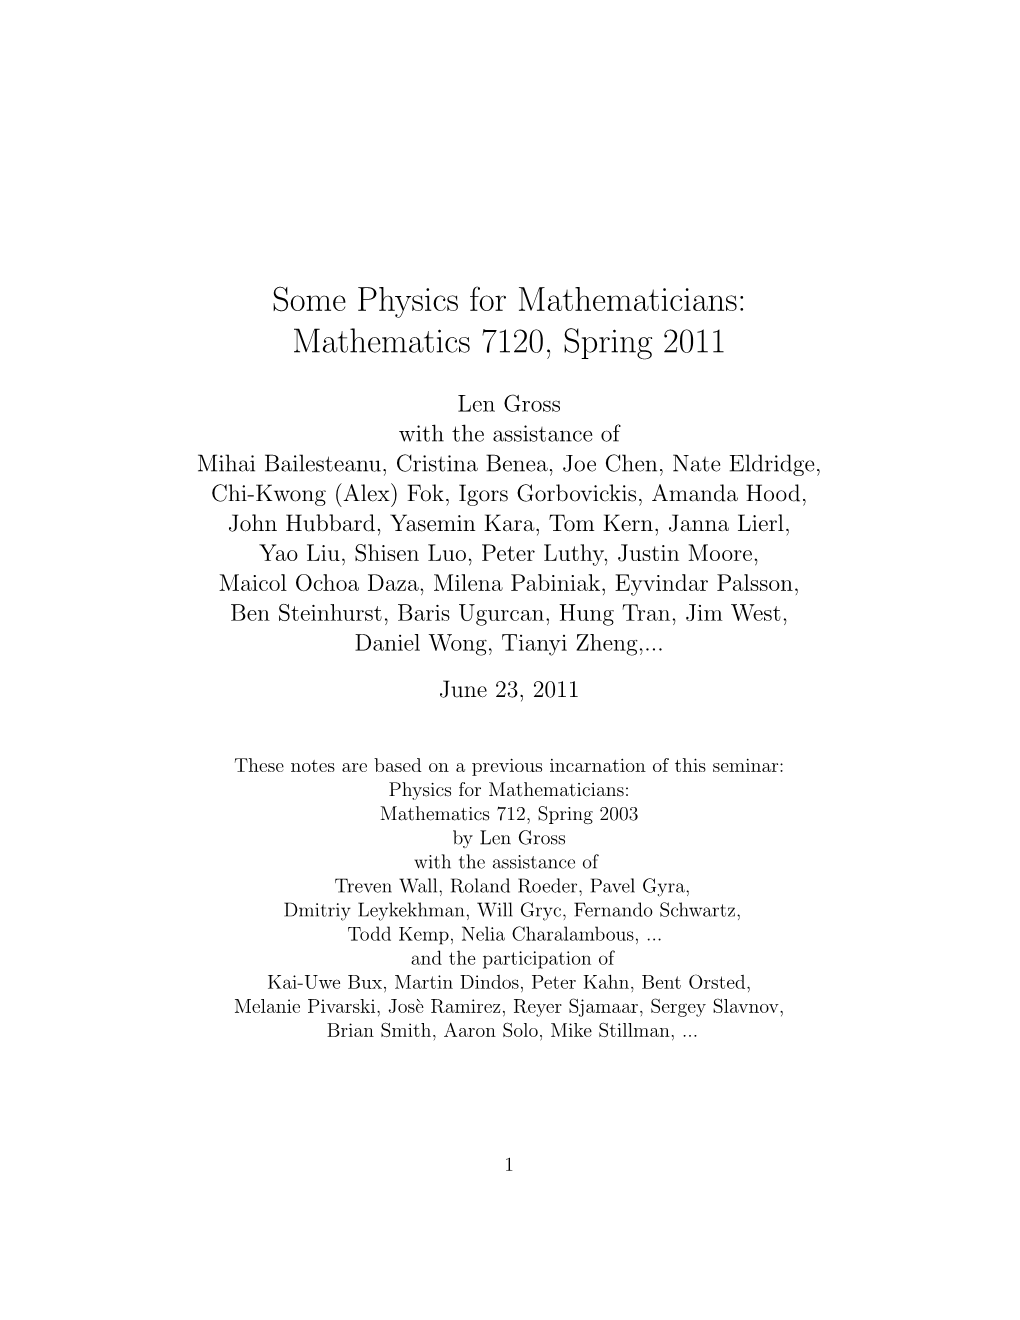 Some Physics for Mathematicians: Mathematics 7120, Spring 2011